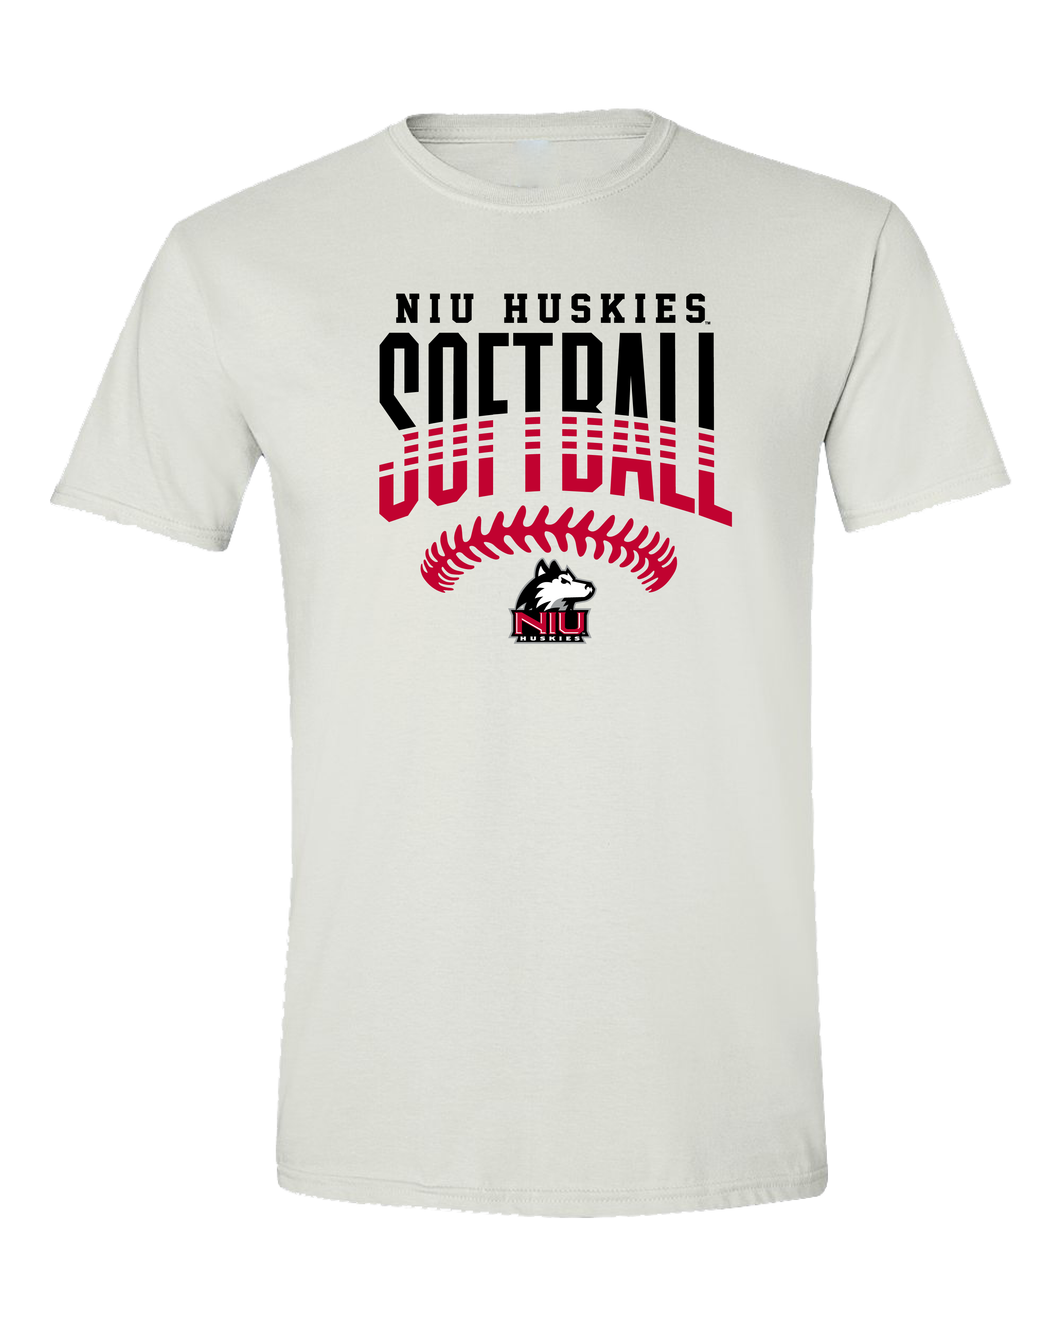 Northern Illinois Softball Unisex T-shirt